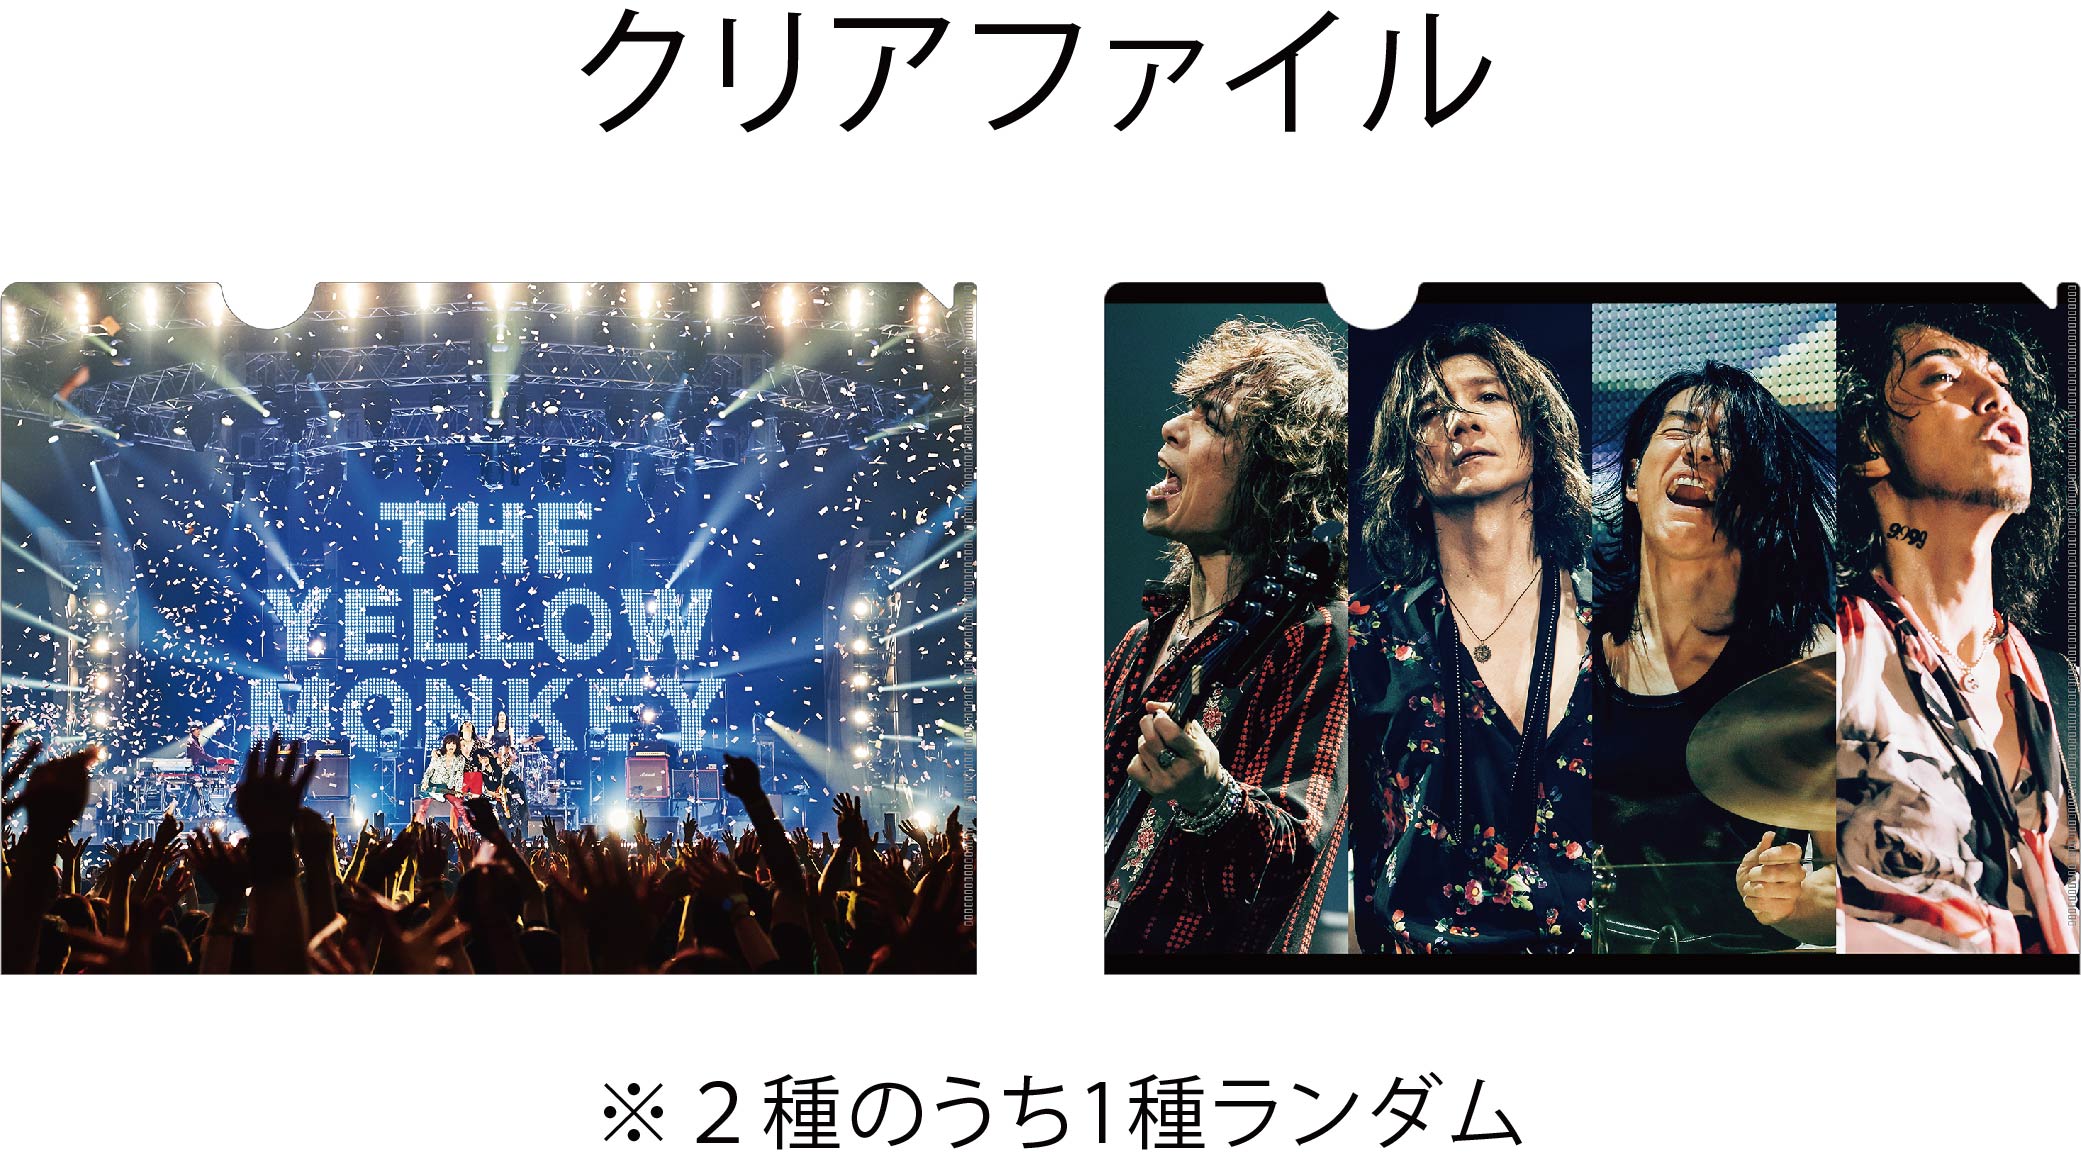 THE YELLOW MONKEY SUPER JAPAN TOUR 2019 -GRATEFUL SPOONFUL